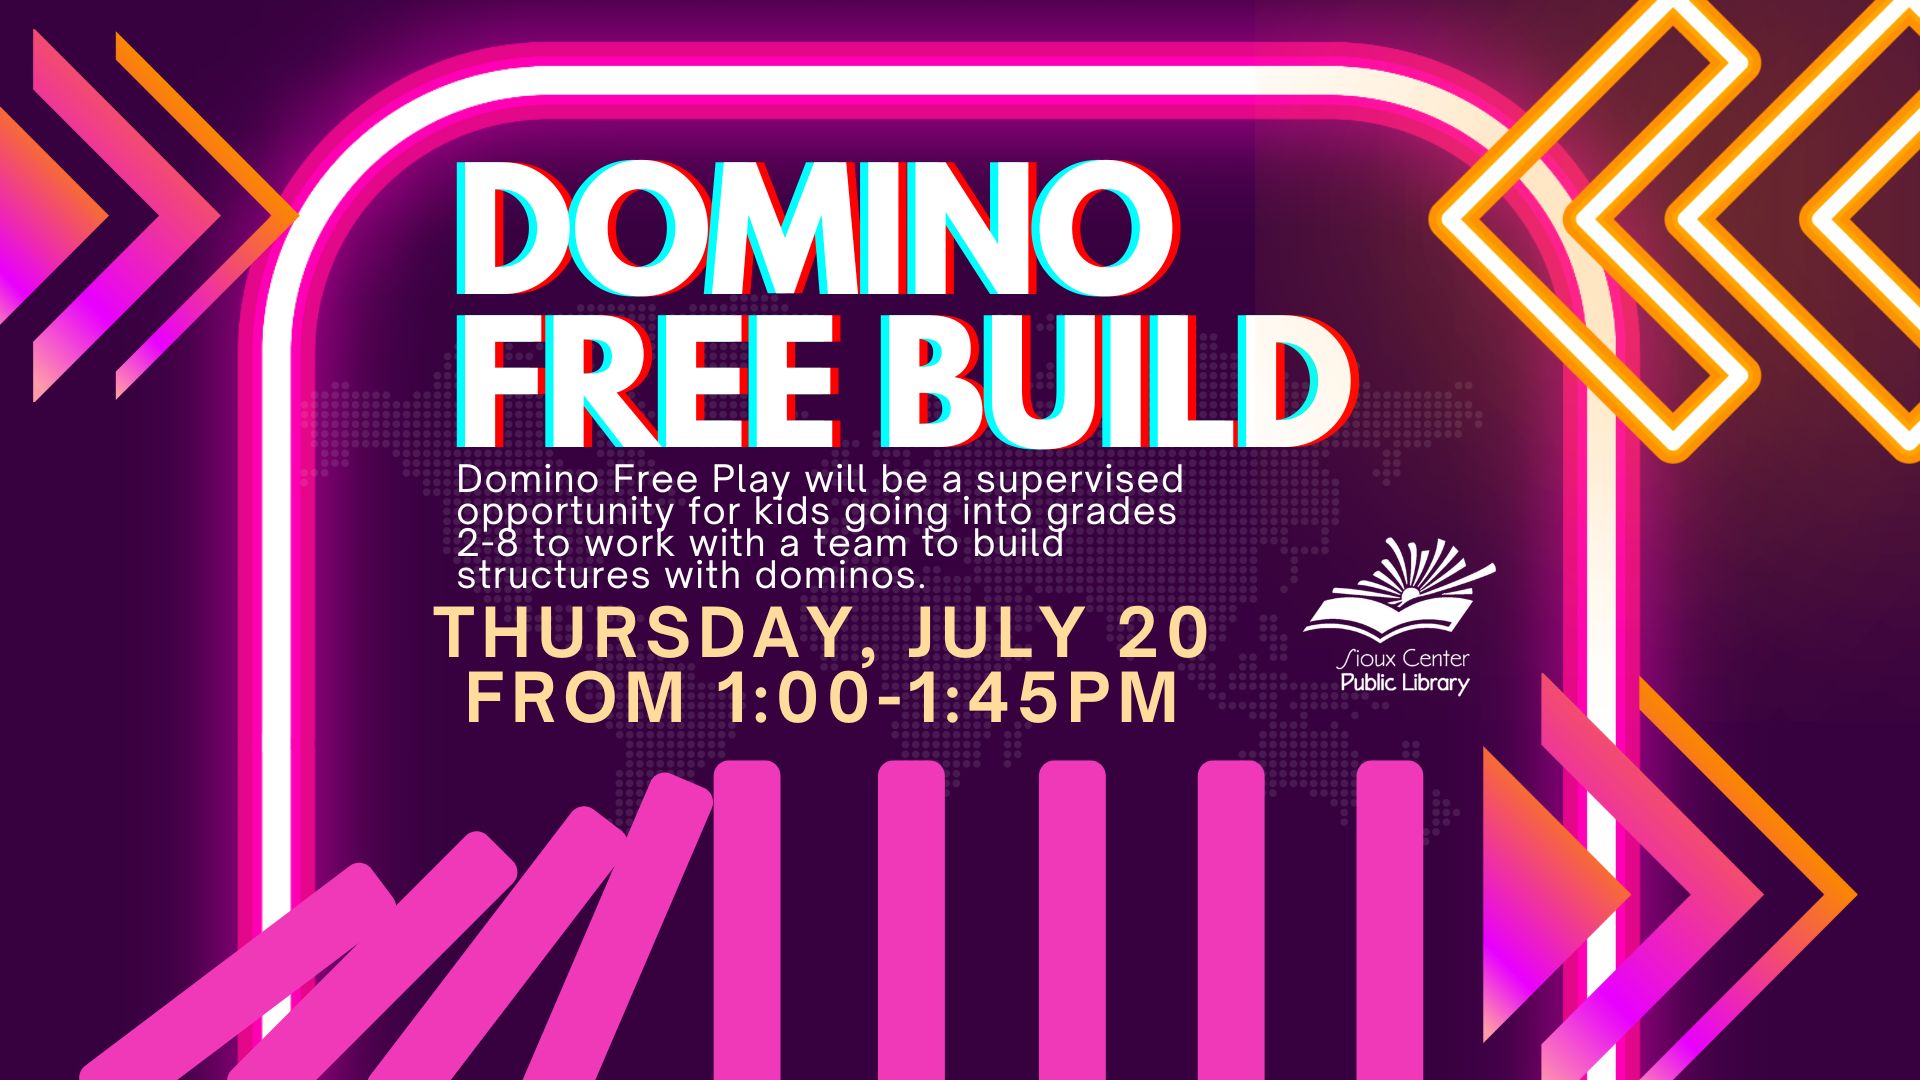 Domino Free Build